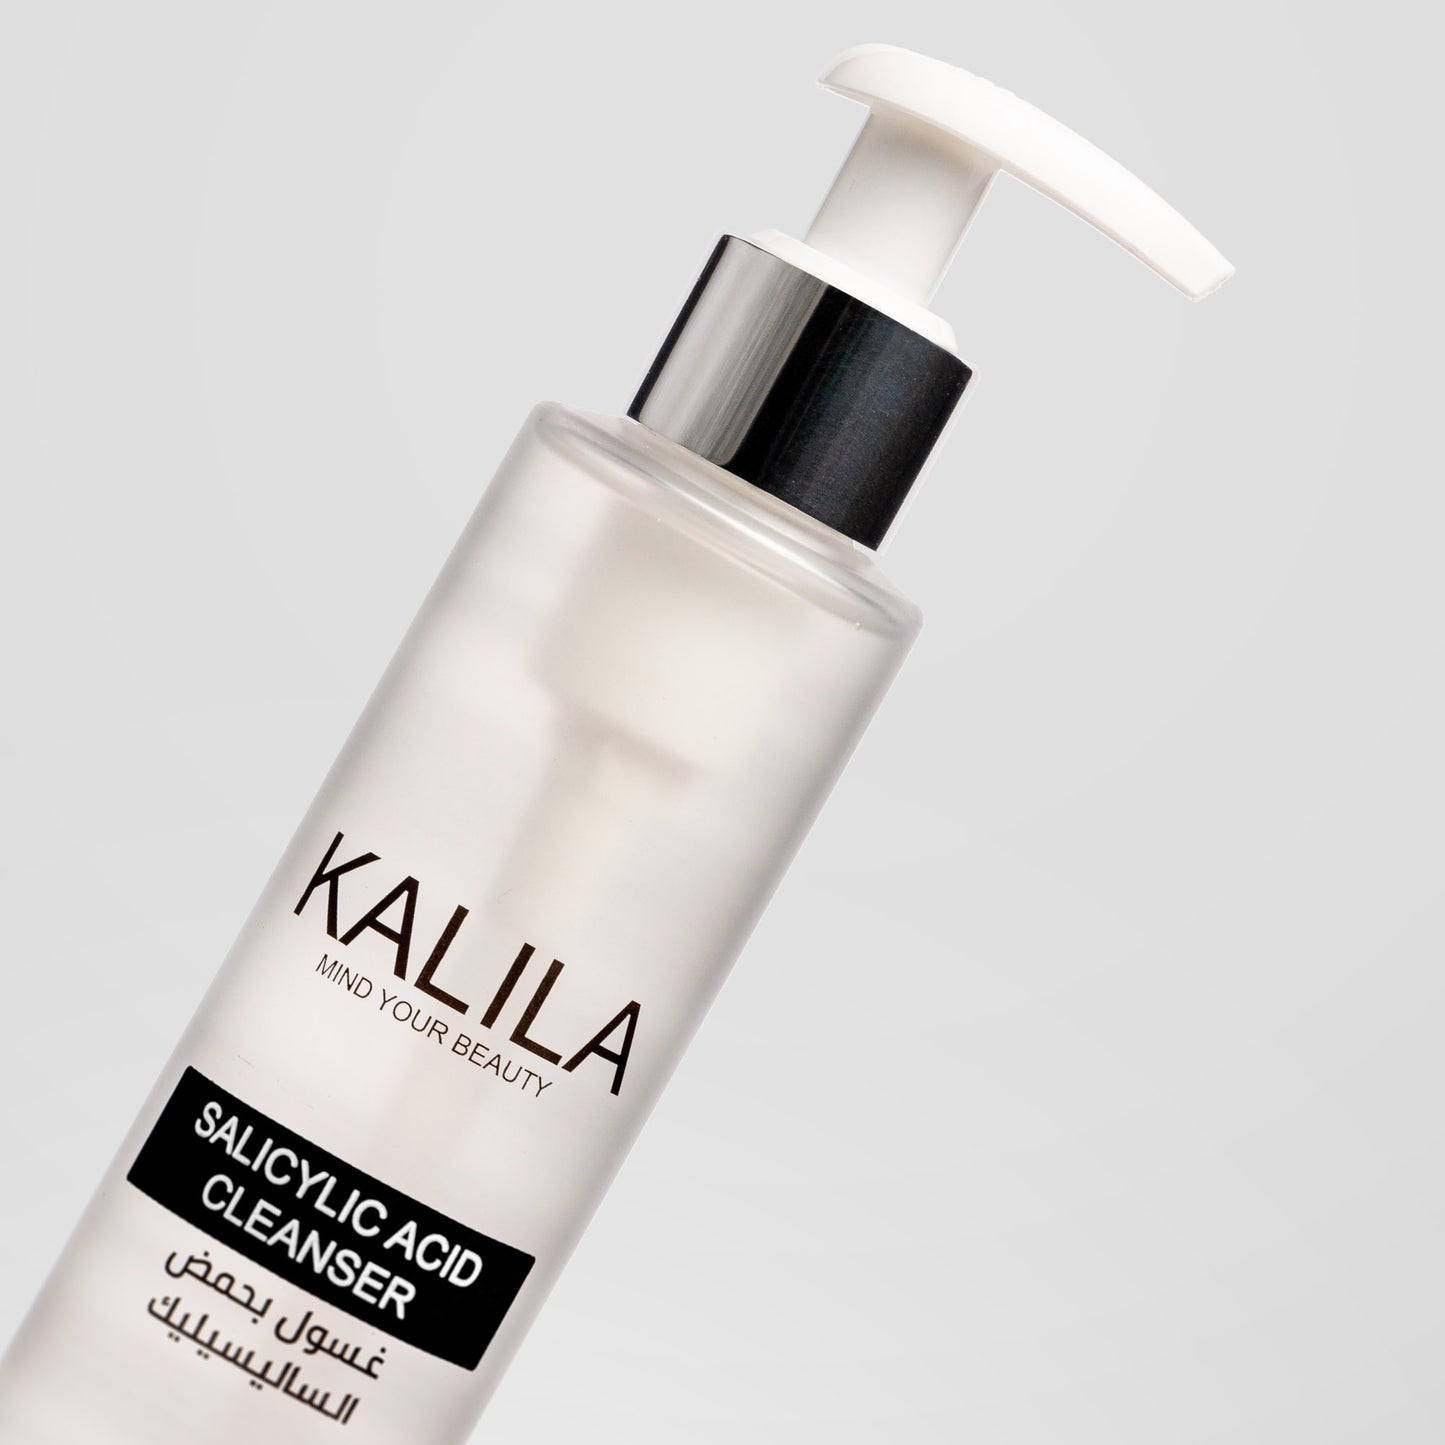 KALILA Salicylic Acid Cleanser 150ml